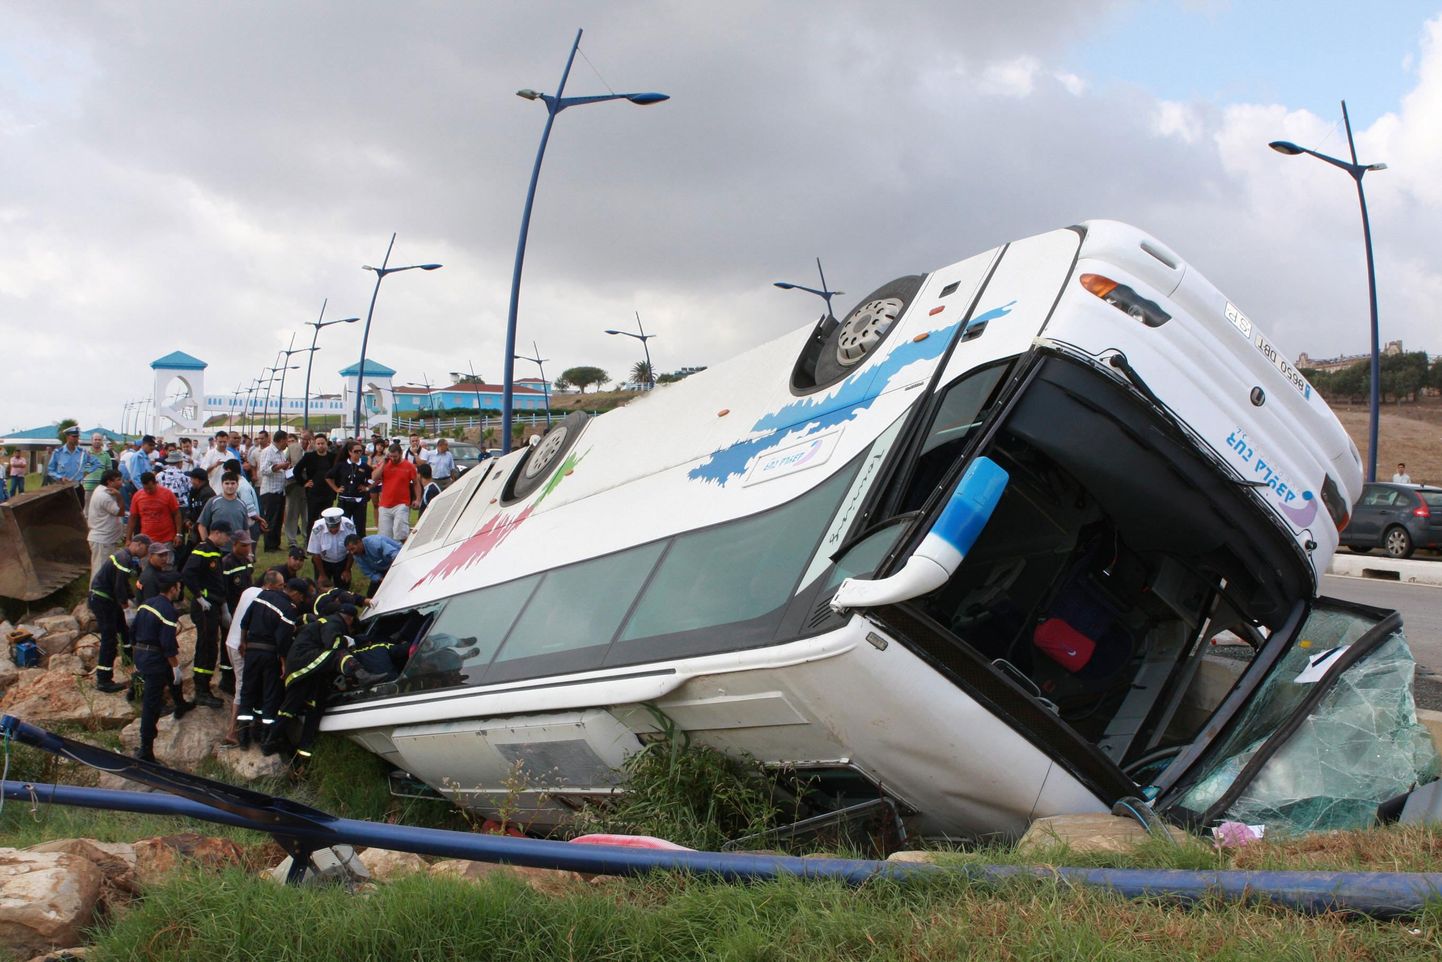 На фото - автокатастрофа, произошедшая в Марокко в сентябре 2010 года